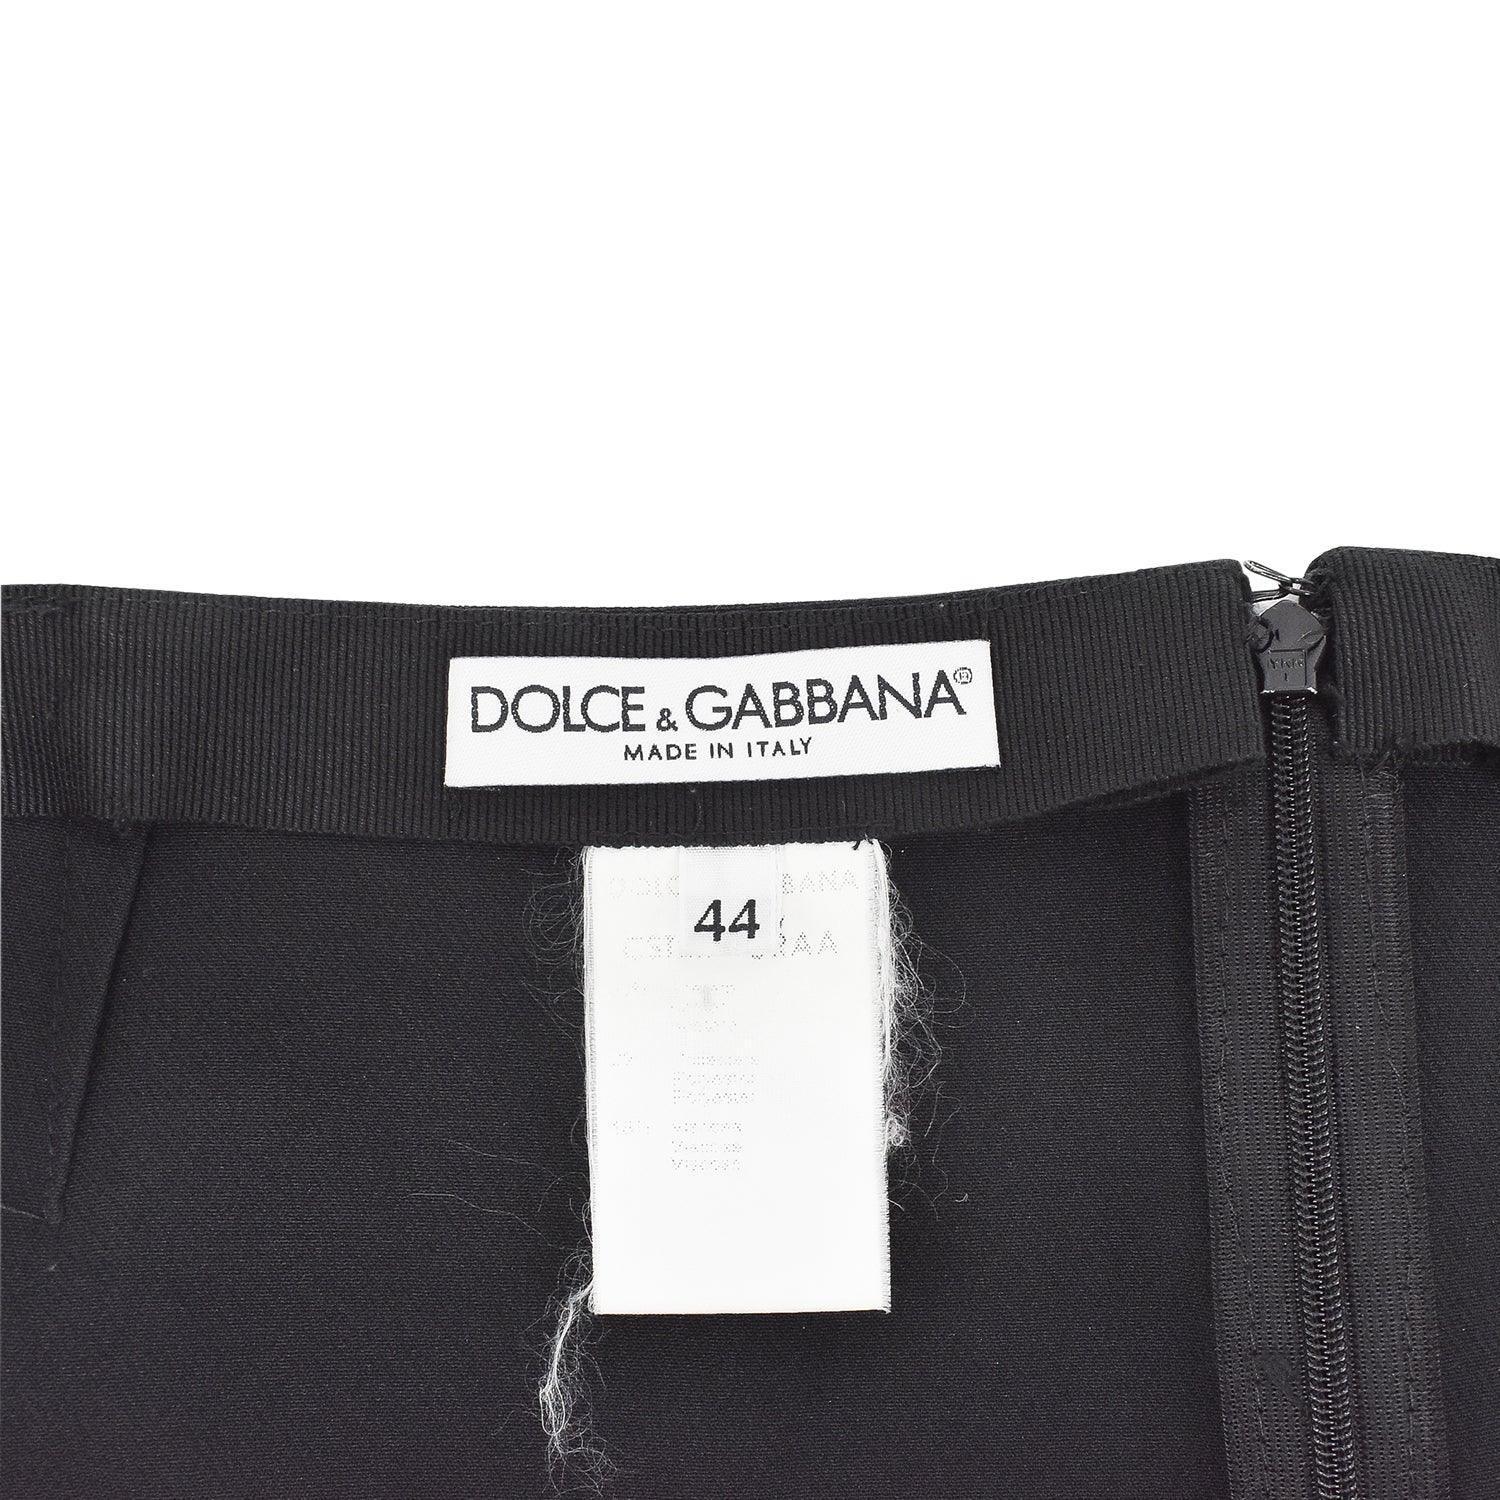 Dolce & Gabbana Pencil Skirt - 44 - Fashionably Yours